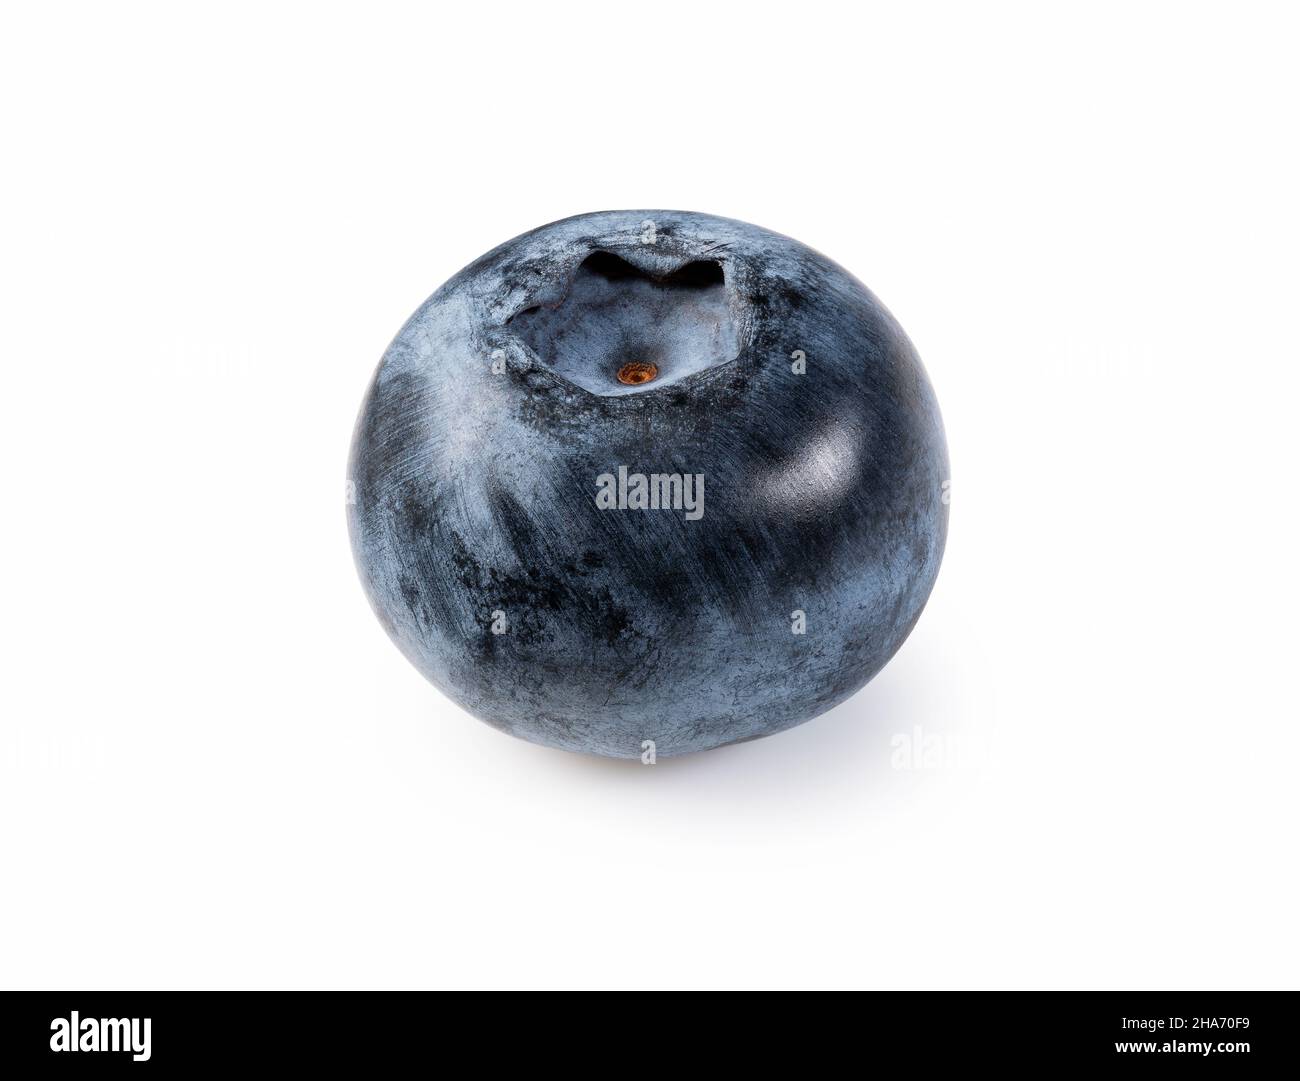 A single blueberry on a white background. Stock Photo